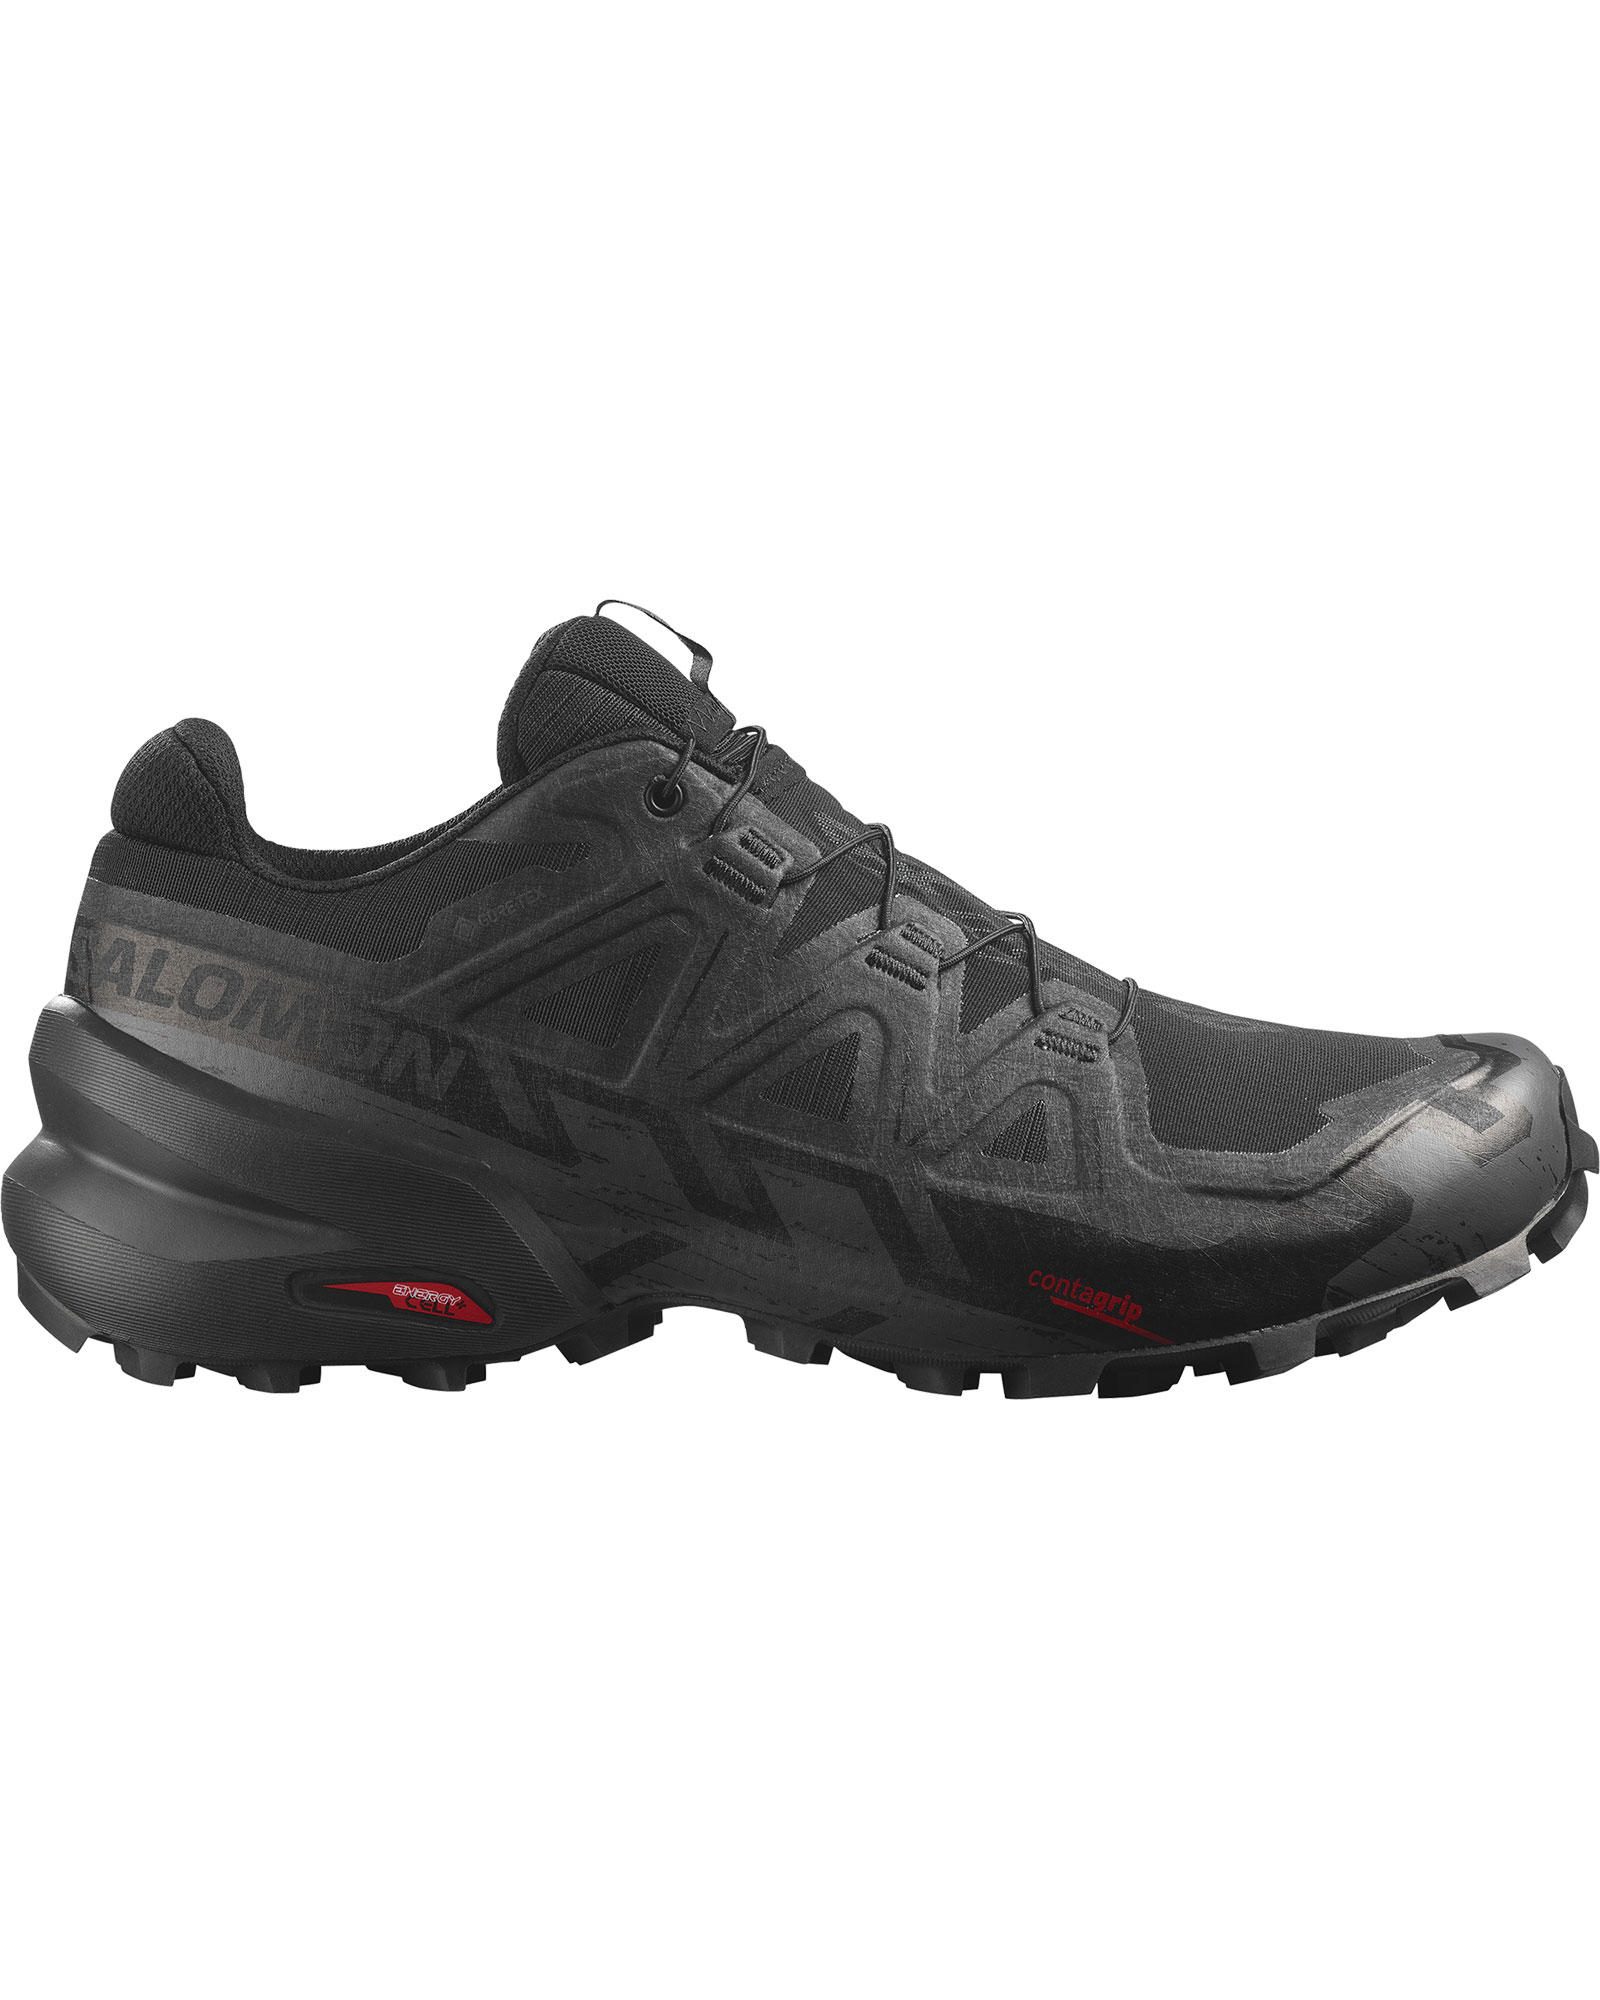 Salomon Speedcross 6 GORE TEX Men’s Shoes - Black/Black/Phantom UK 11.5